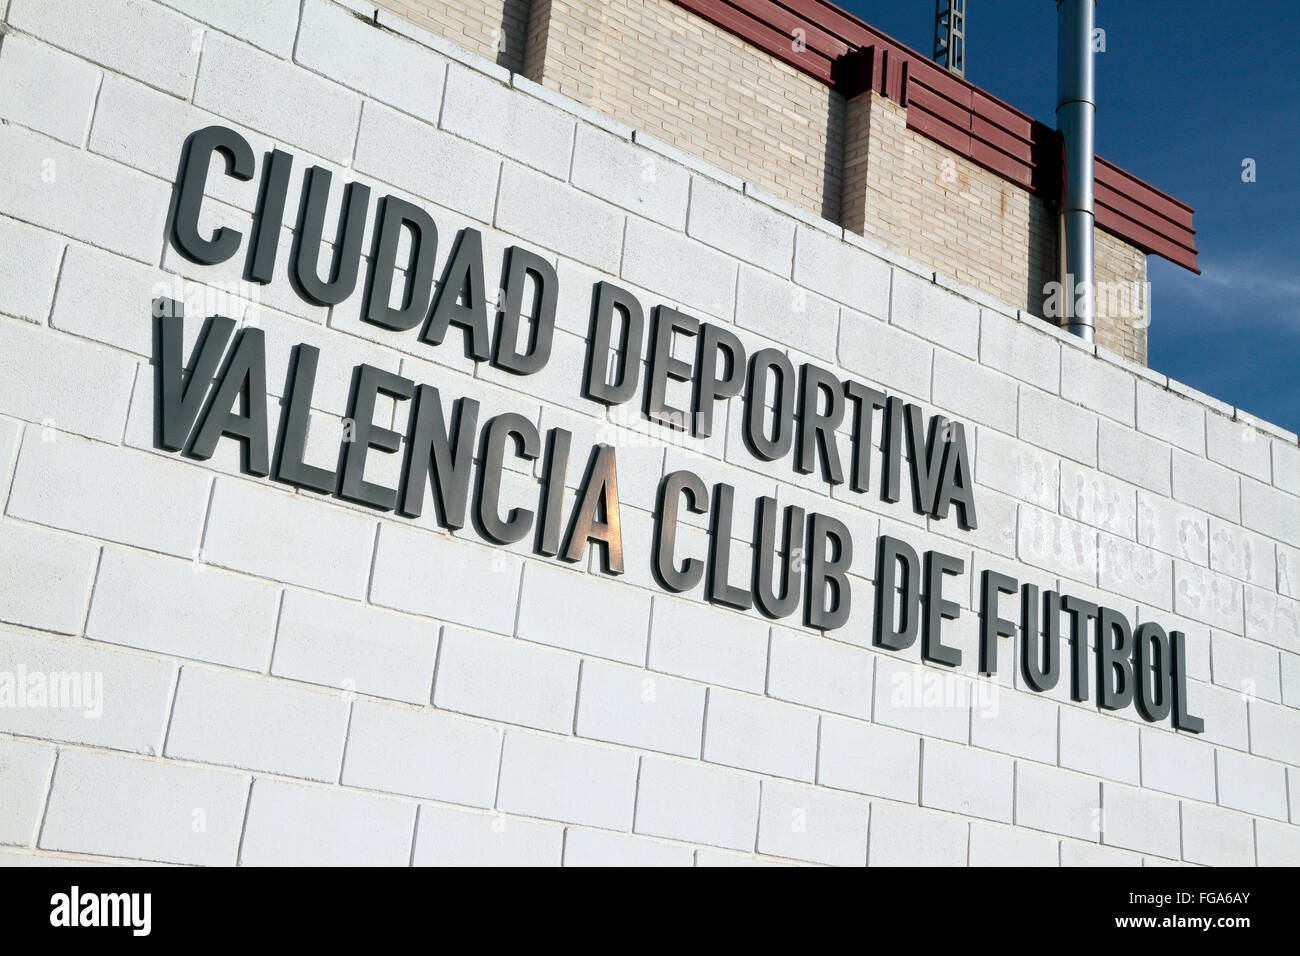 Le Valencia CF La Liga football équipe équipe de formation (Ciudad Deportiva de Paterna) à Valence, en Espagne. Banque D'Images